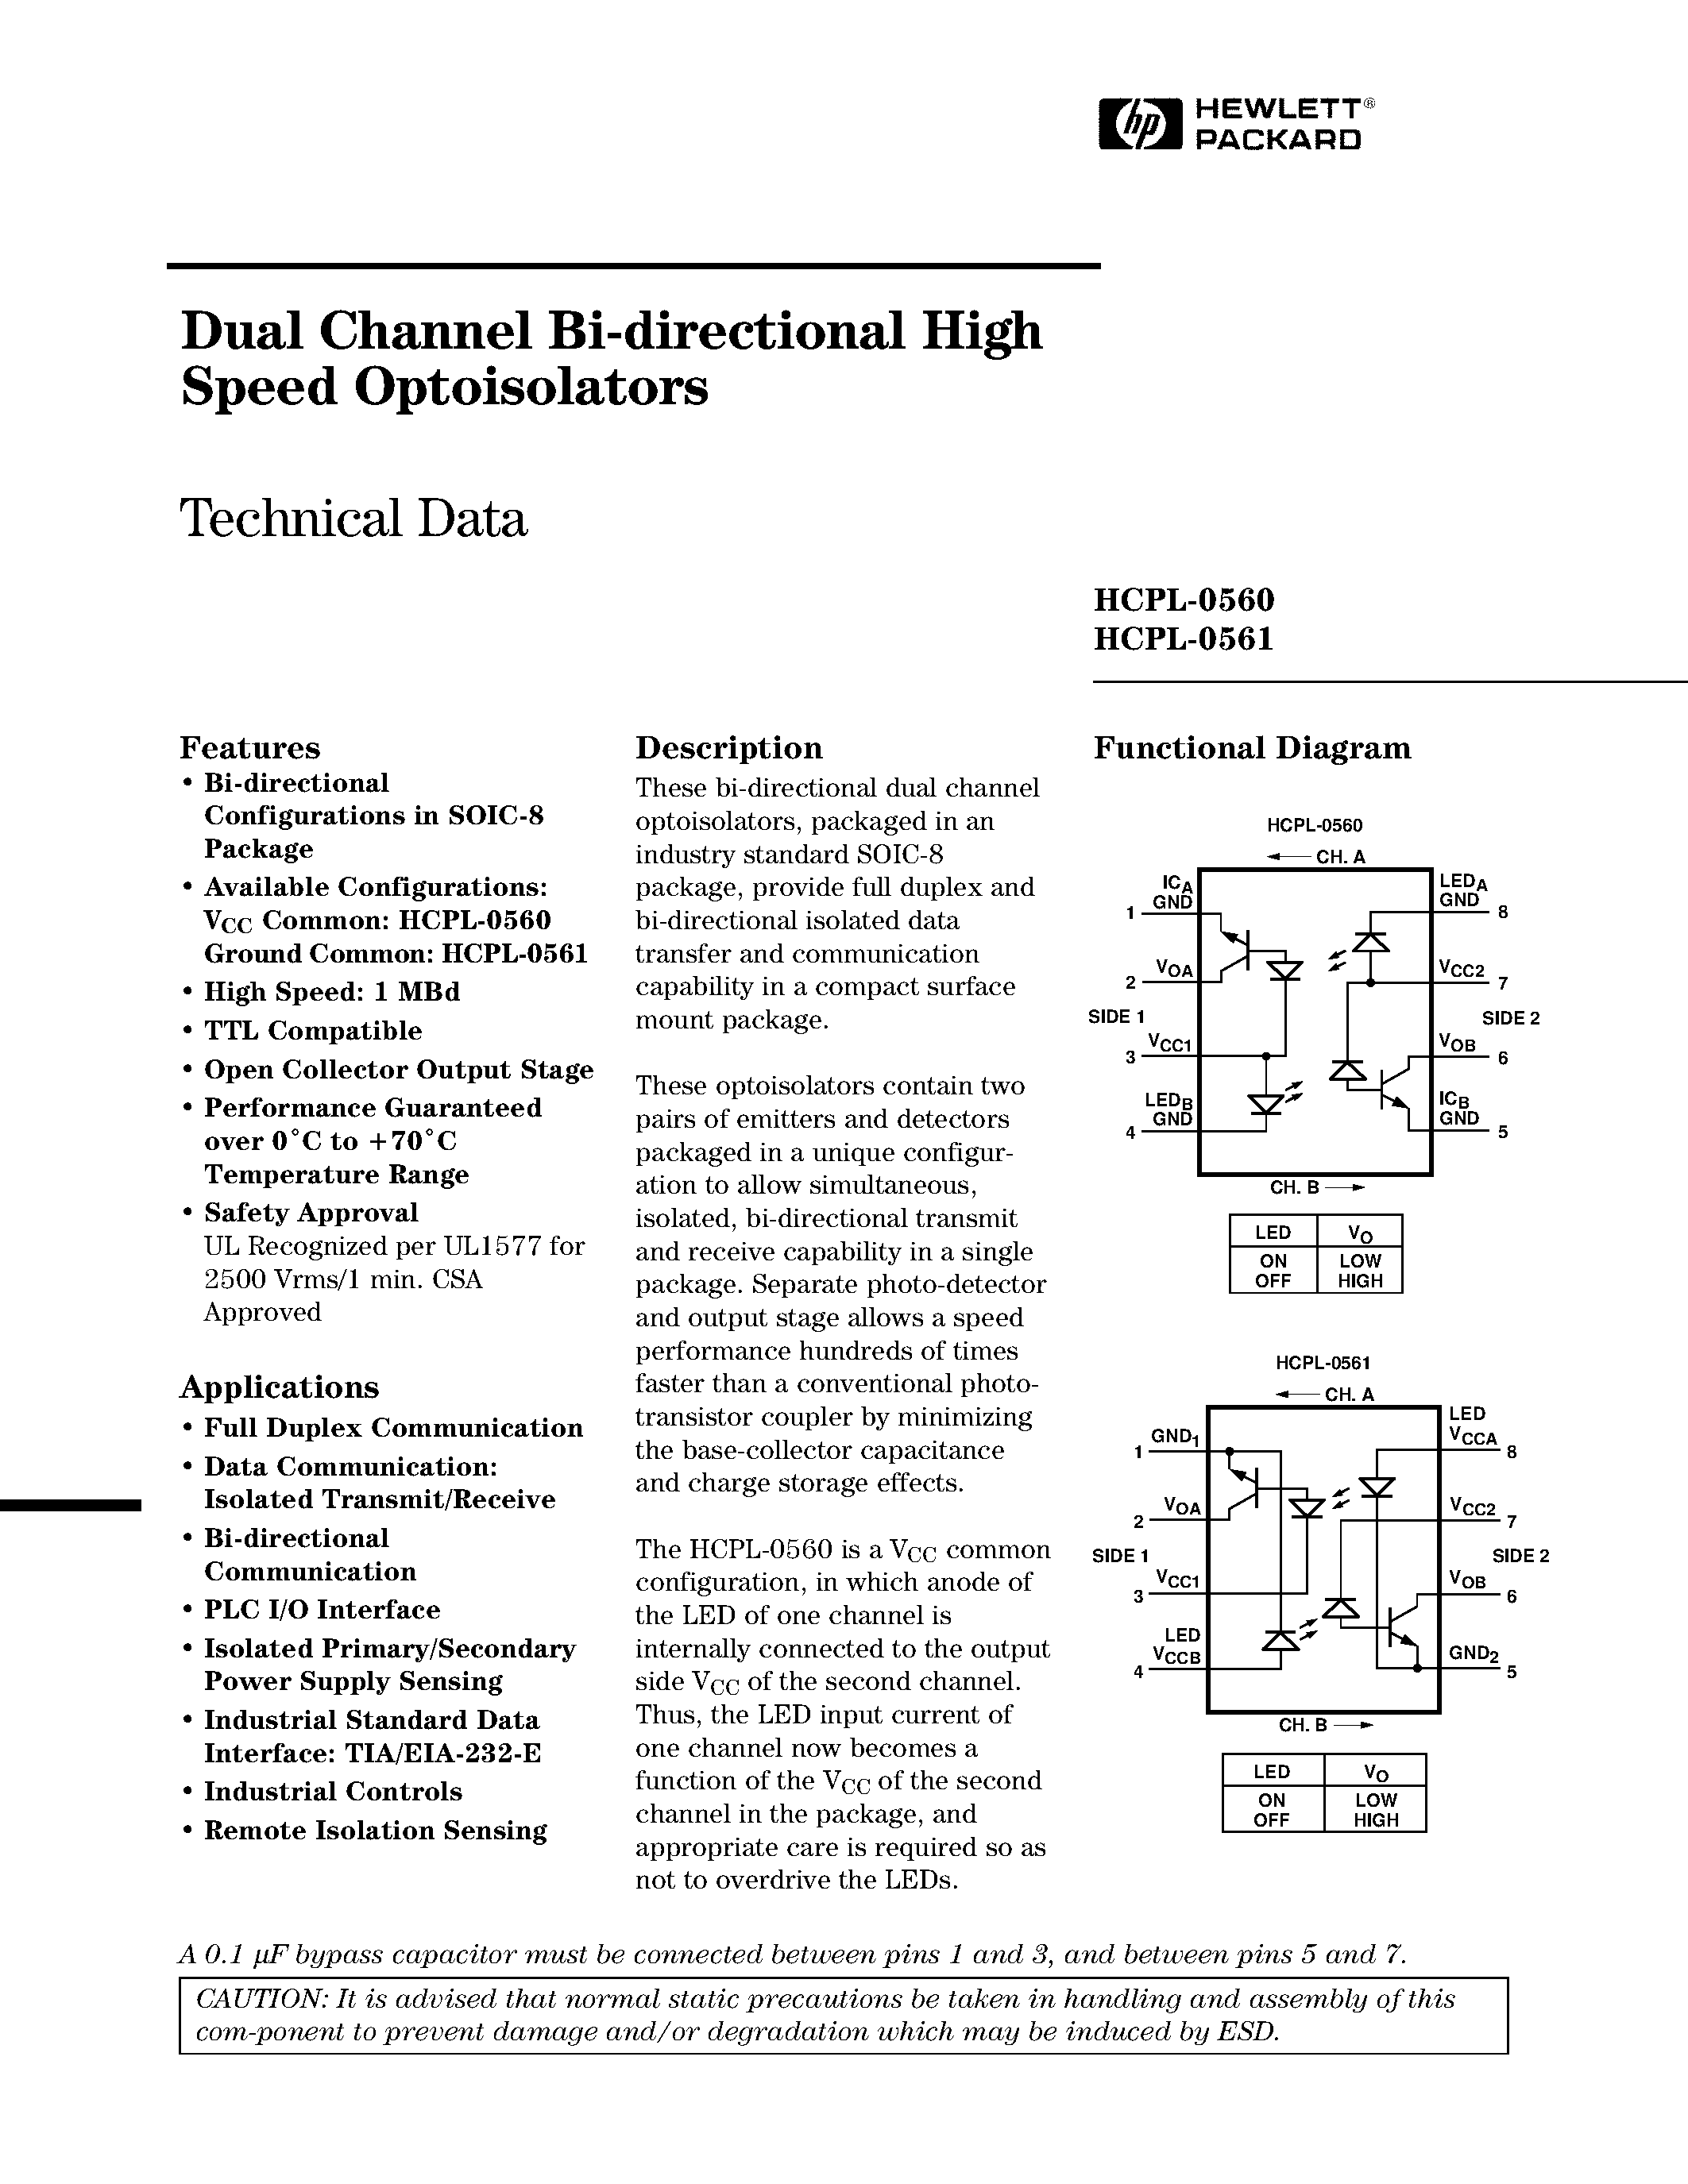 Даташит HCPL-0560 - (HCPL-0560 / HCPL-0561) Dual Channel Bi-directional High Speed Optoisolators страница 1